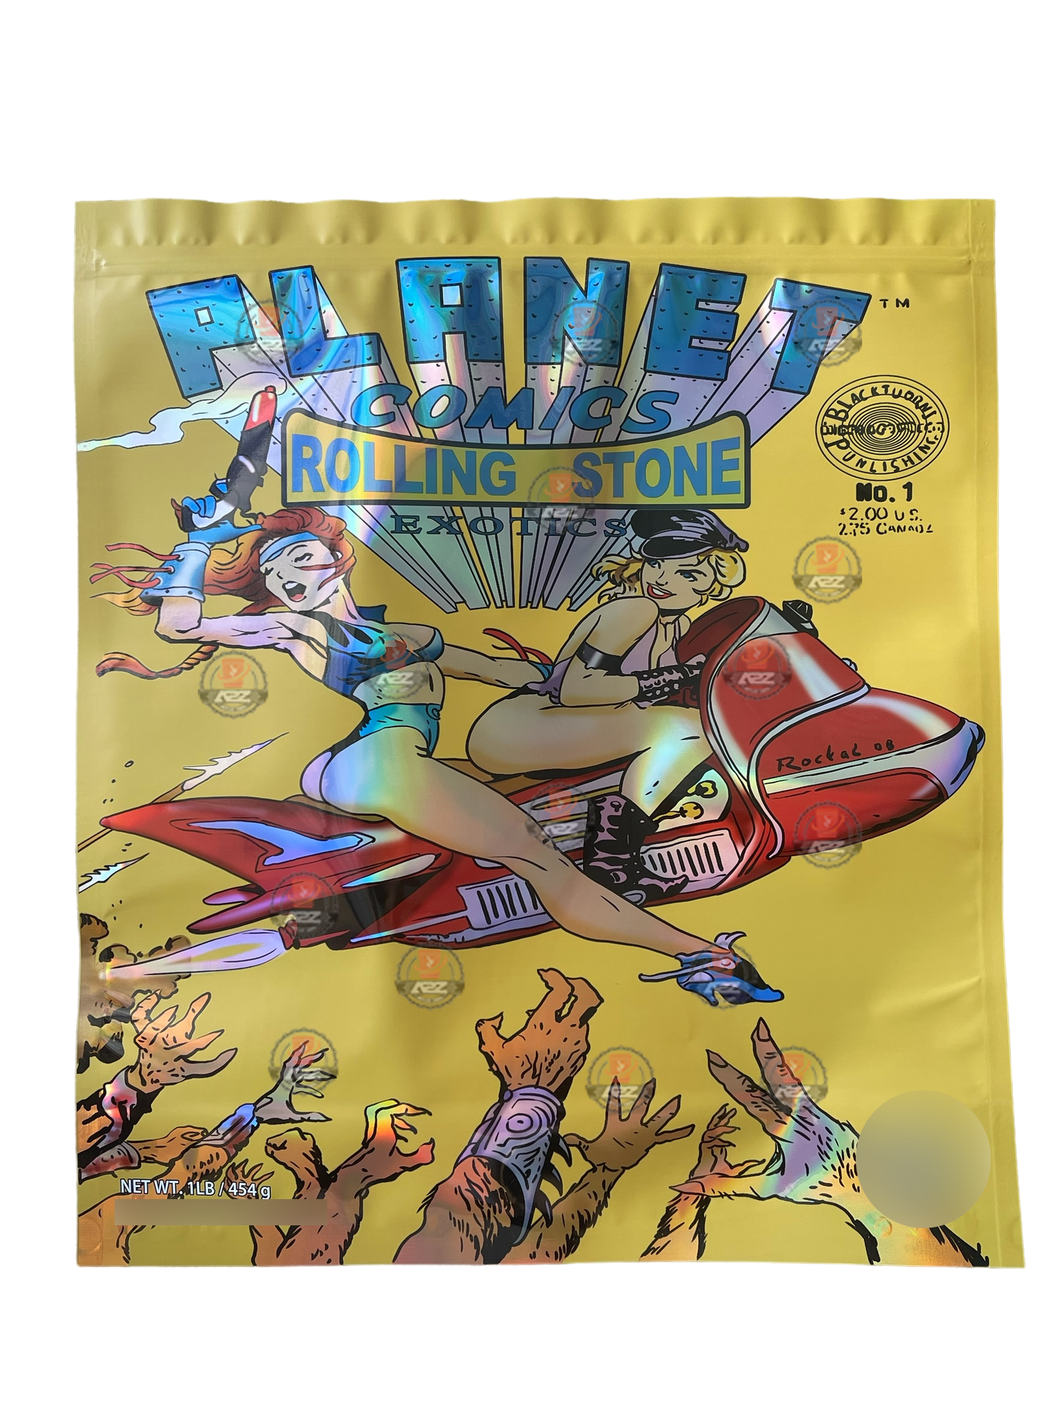 Planet Comics Mylar Bag (Large) 1 LBS - 16OZ (454g) Pound Bag Rolling Stone